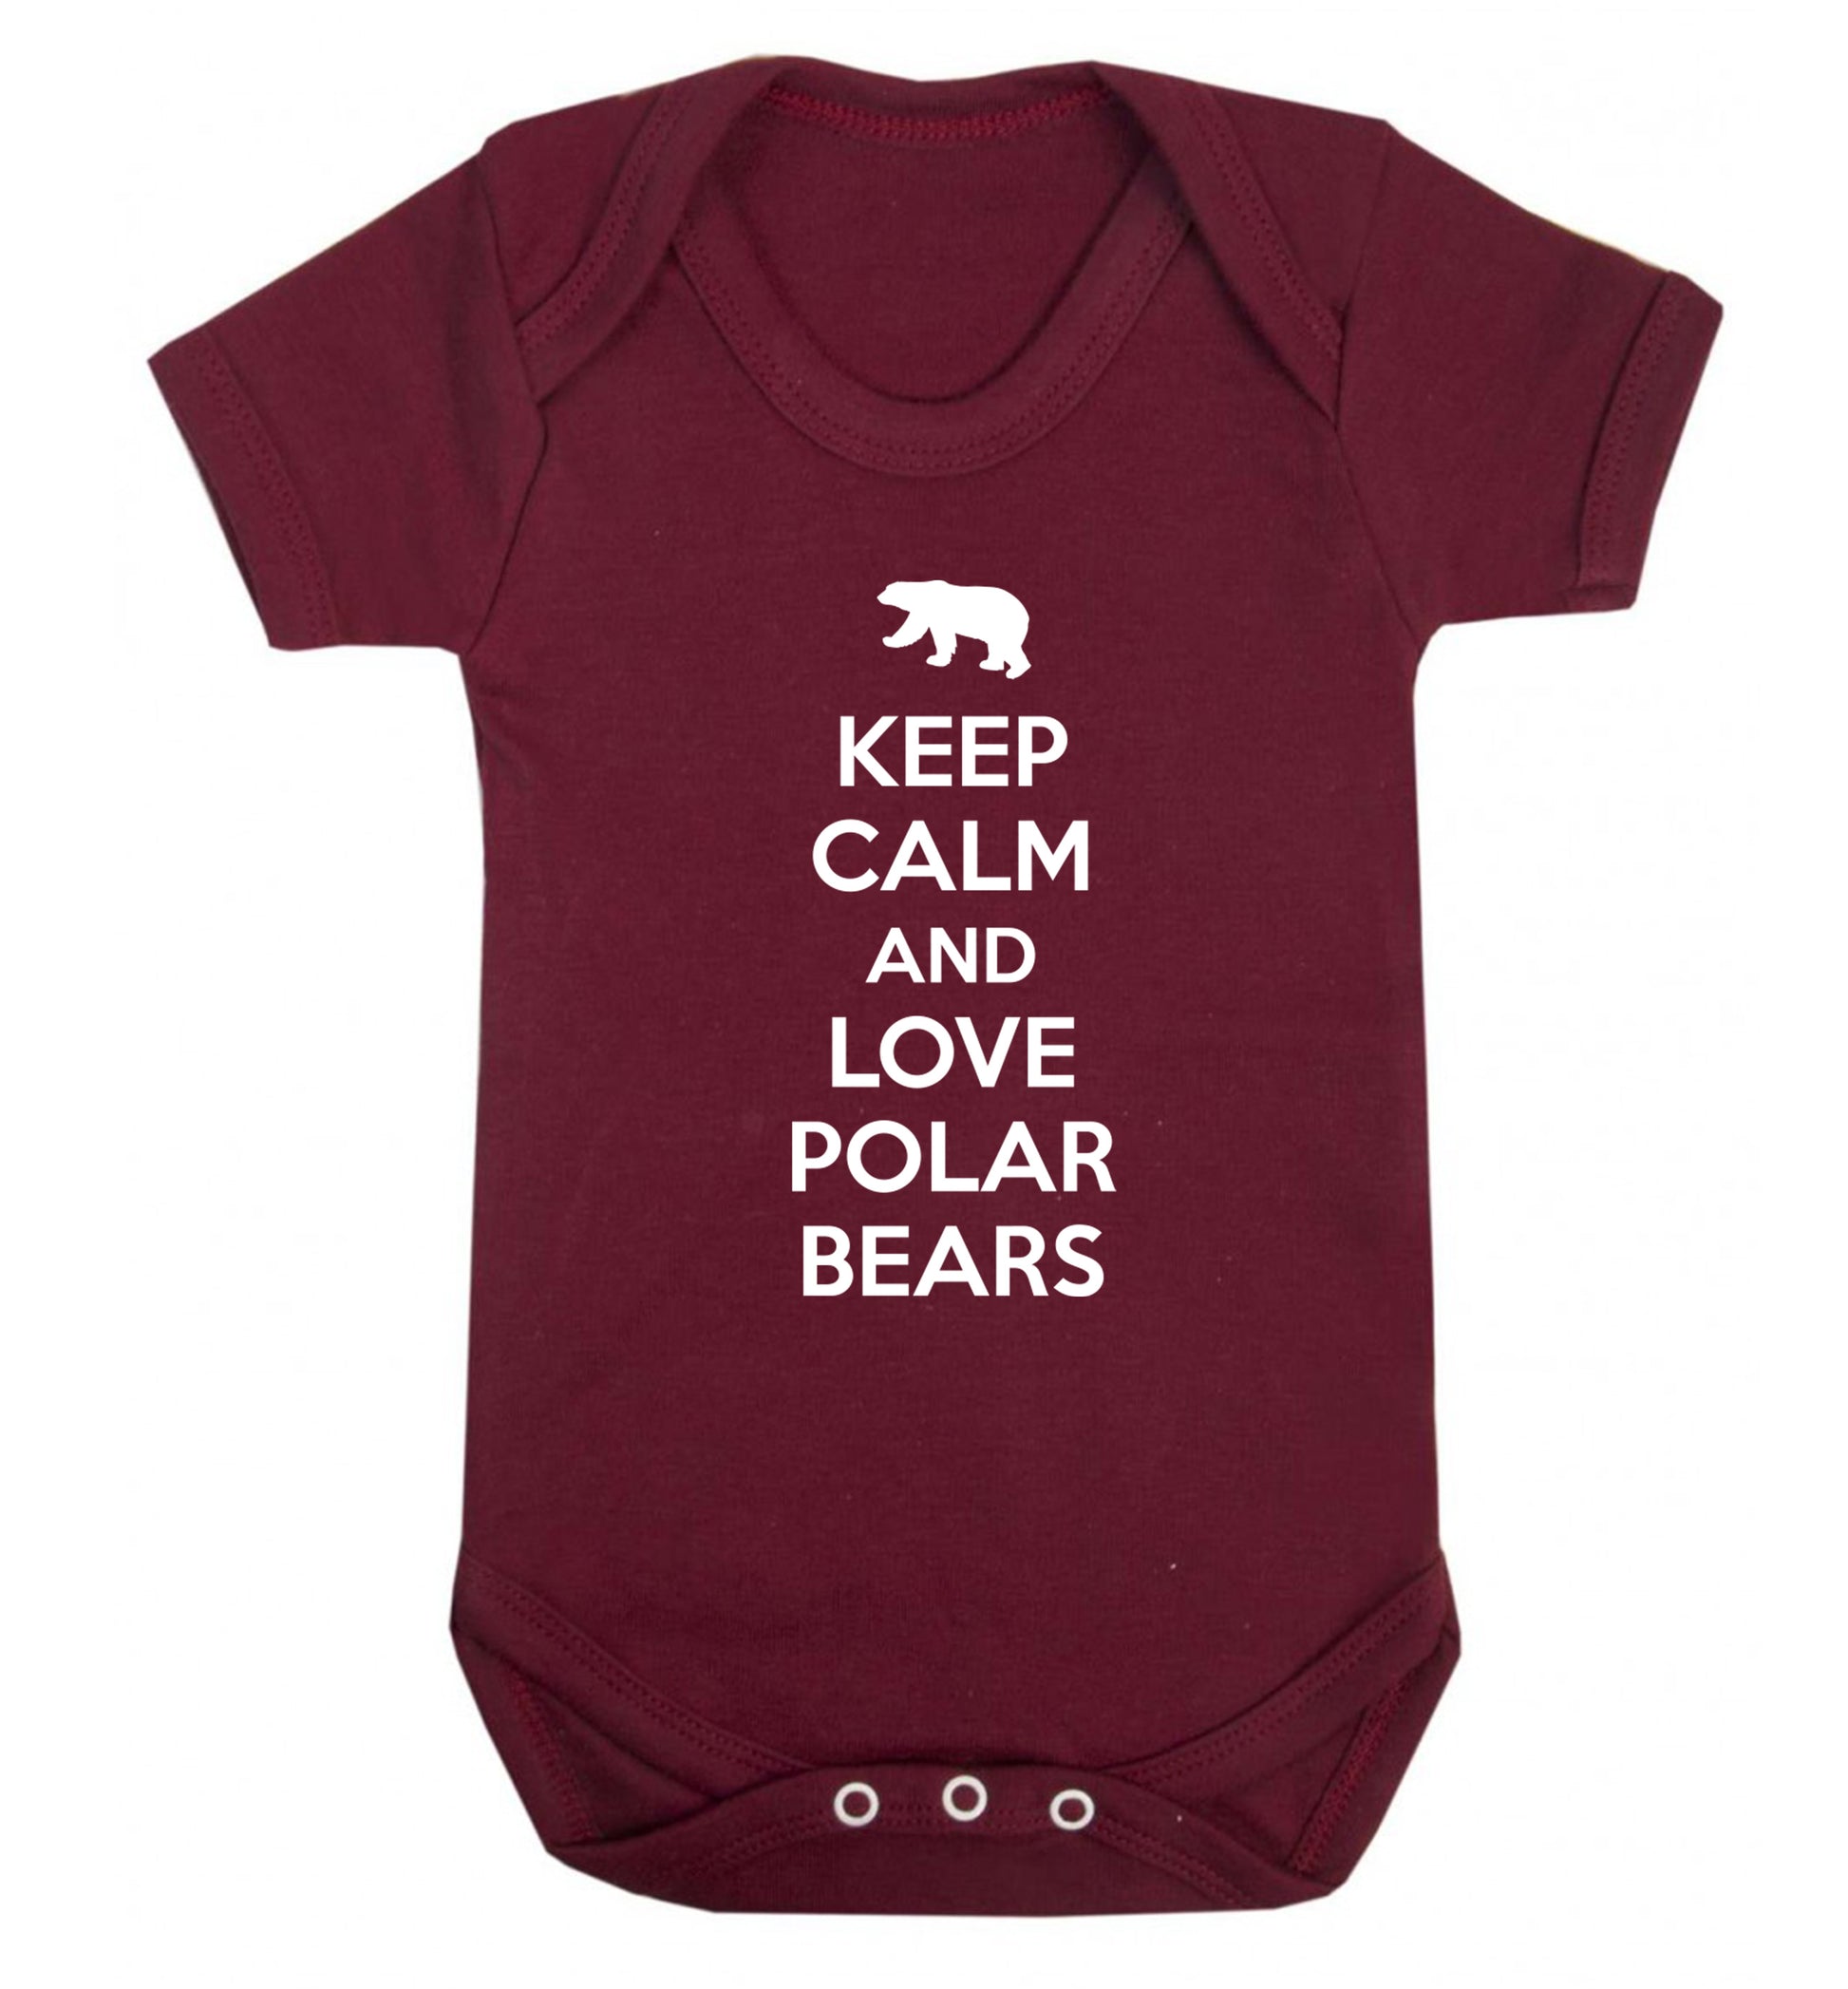 Keep calm and love polar bears Baby Vest maroon 18-24 months